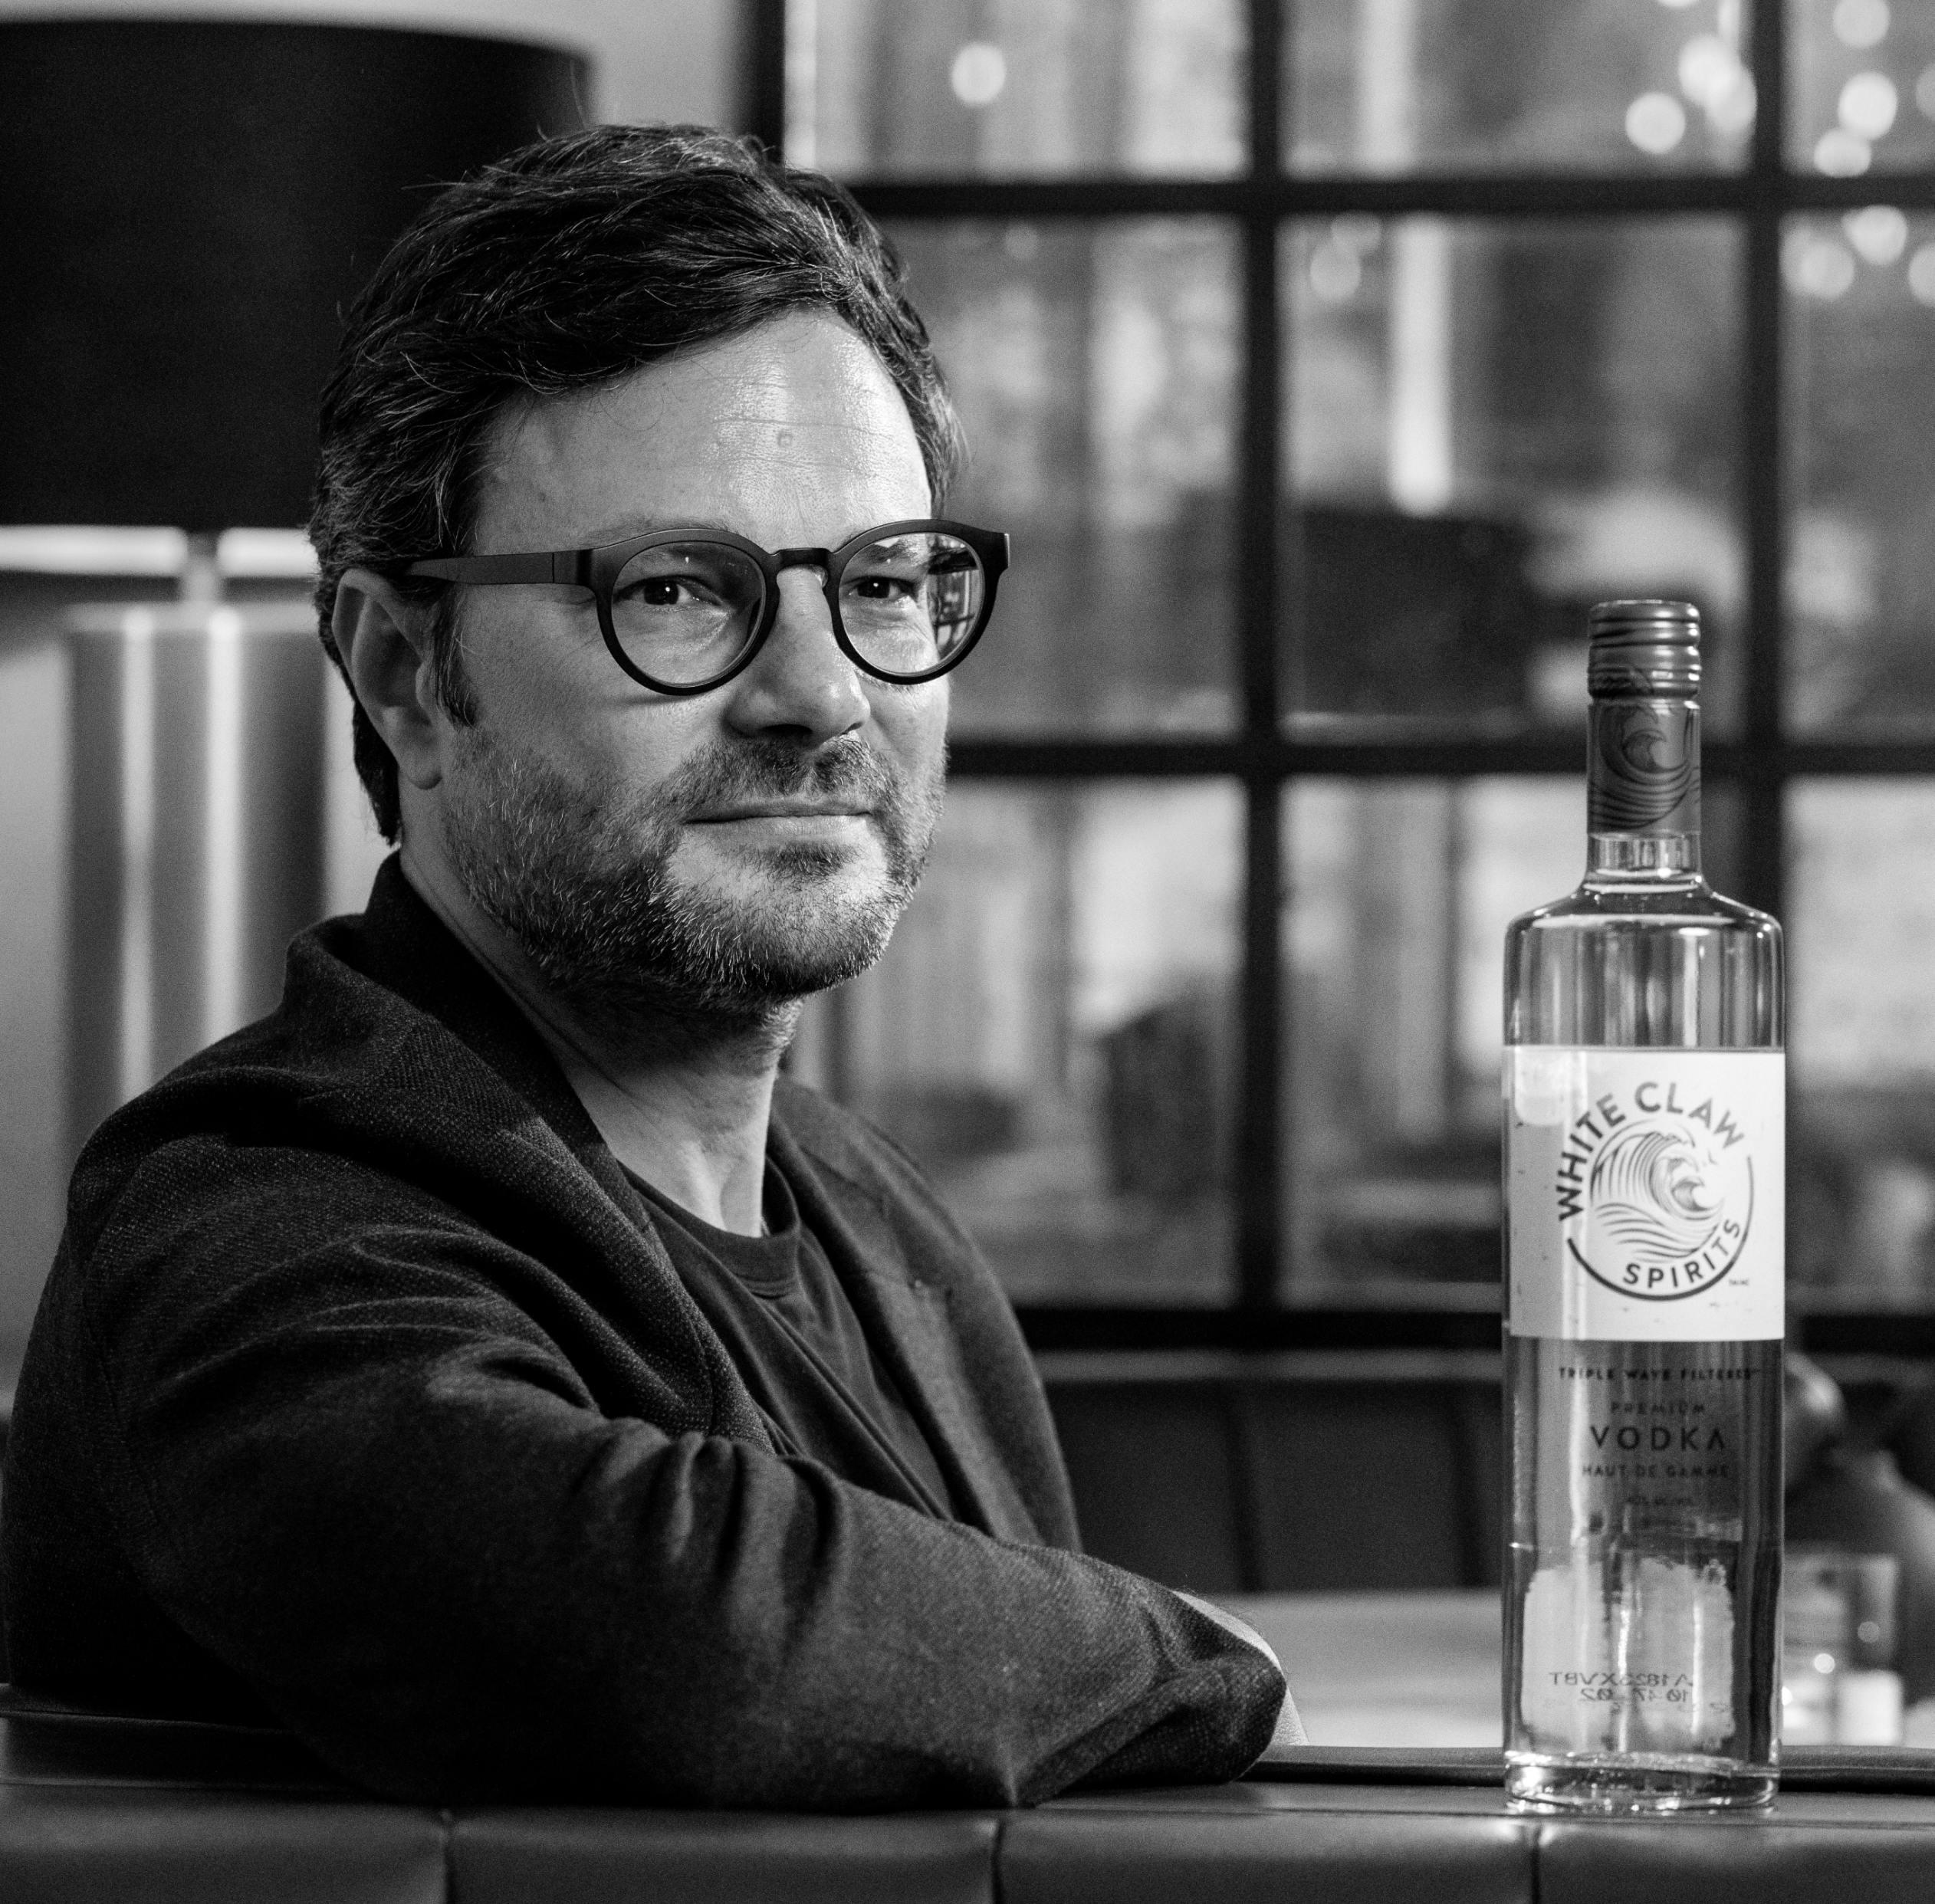 Vodka master blender Andres Faustinelli poses beside a bottle of White Claw® Premium vodka